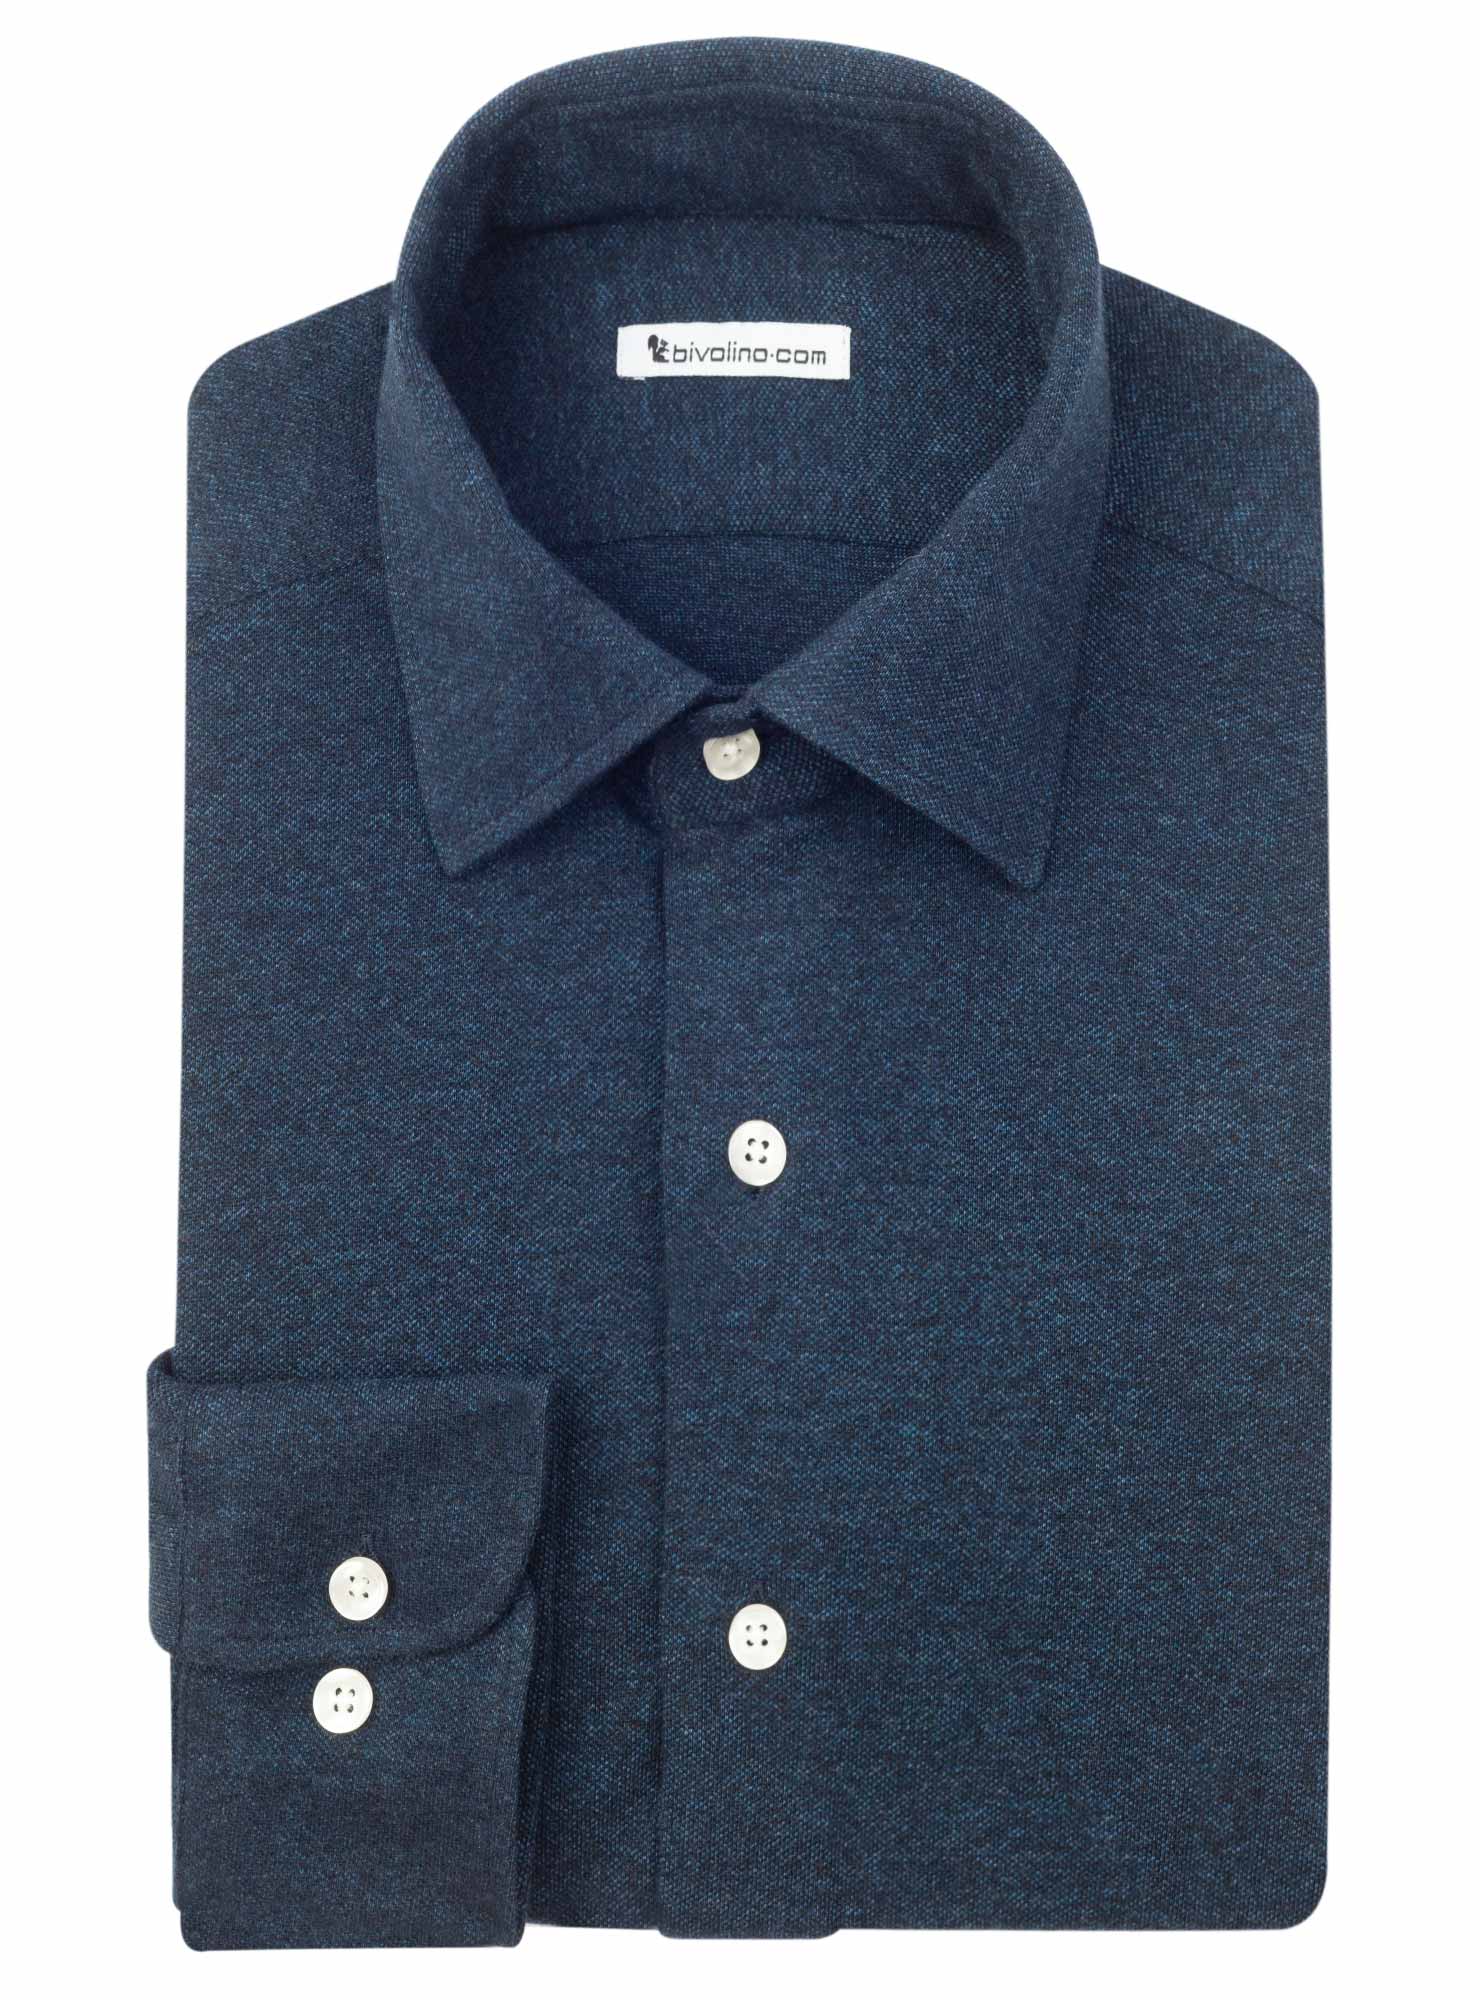 PRIVERNO - Jersey de piqué 100% algodón azul marino camisa de hombre - JERSILI 4